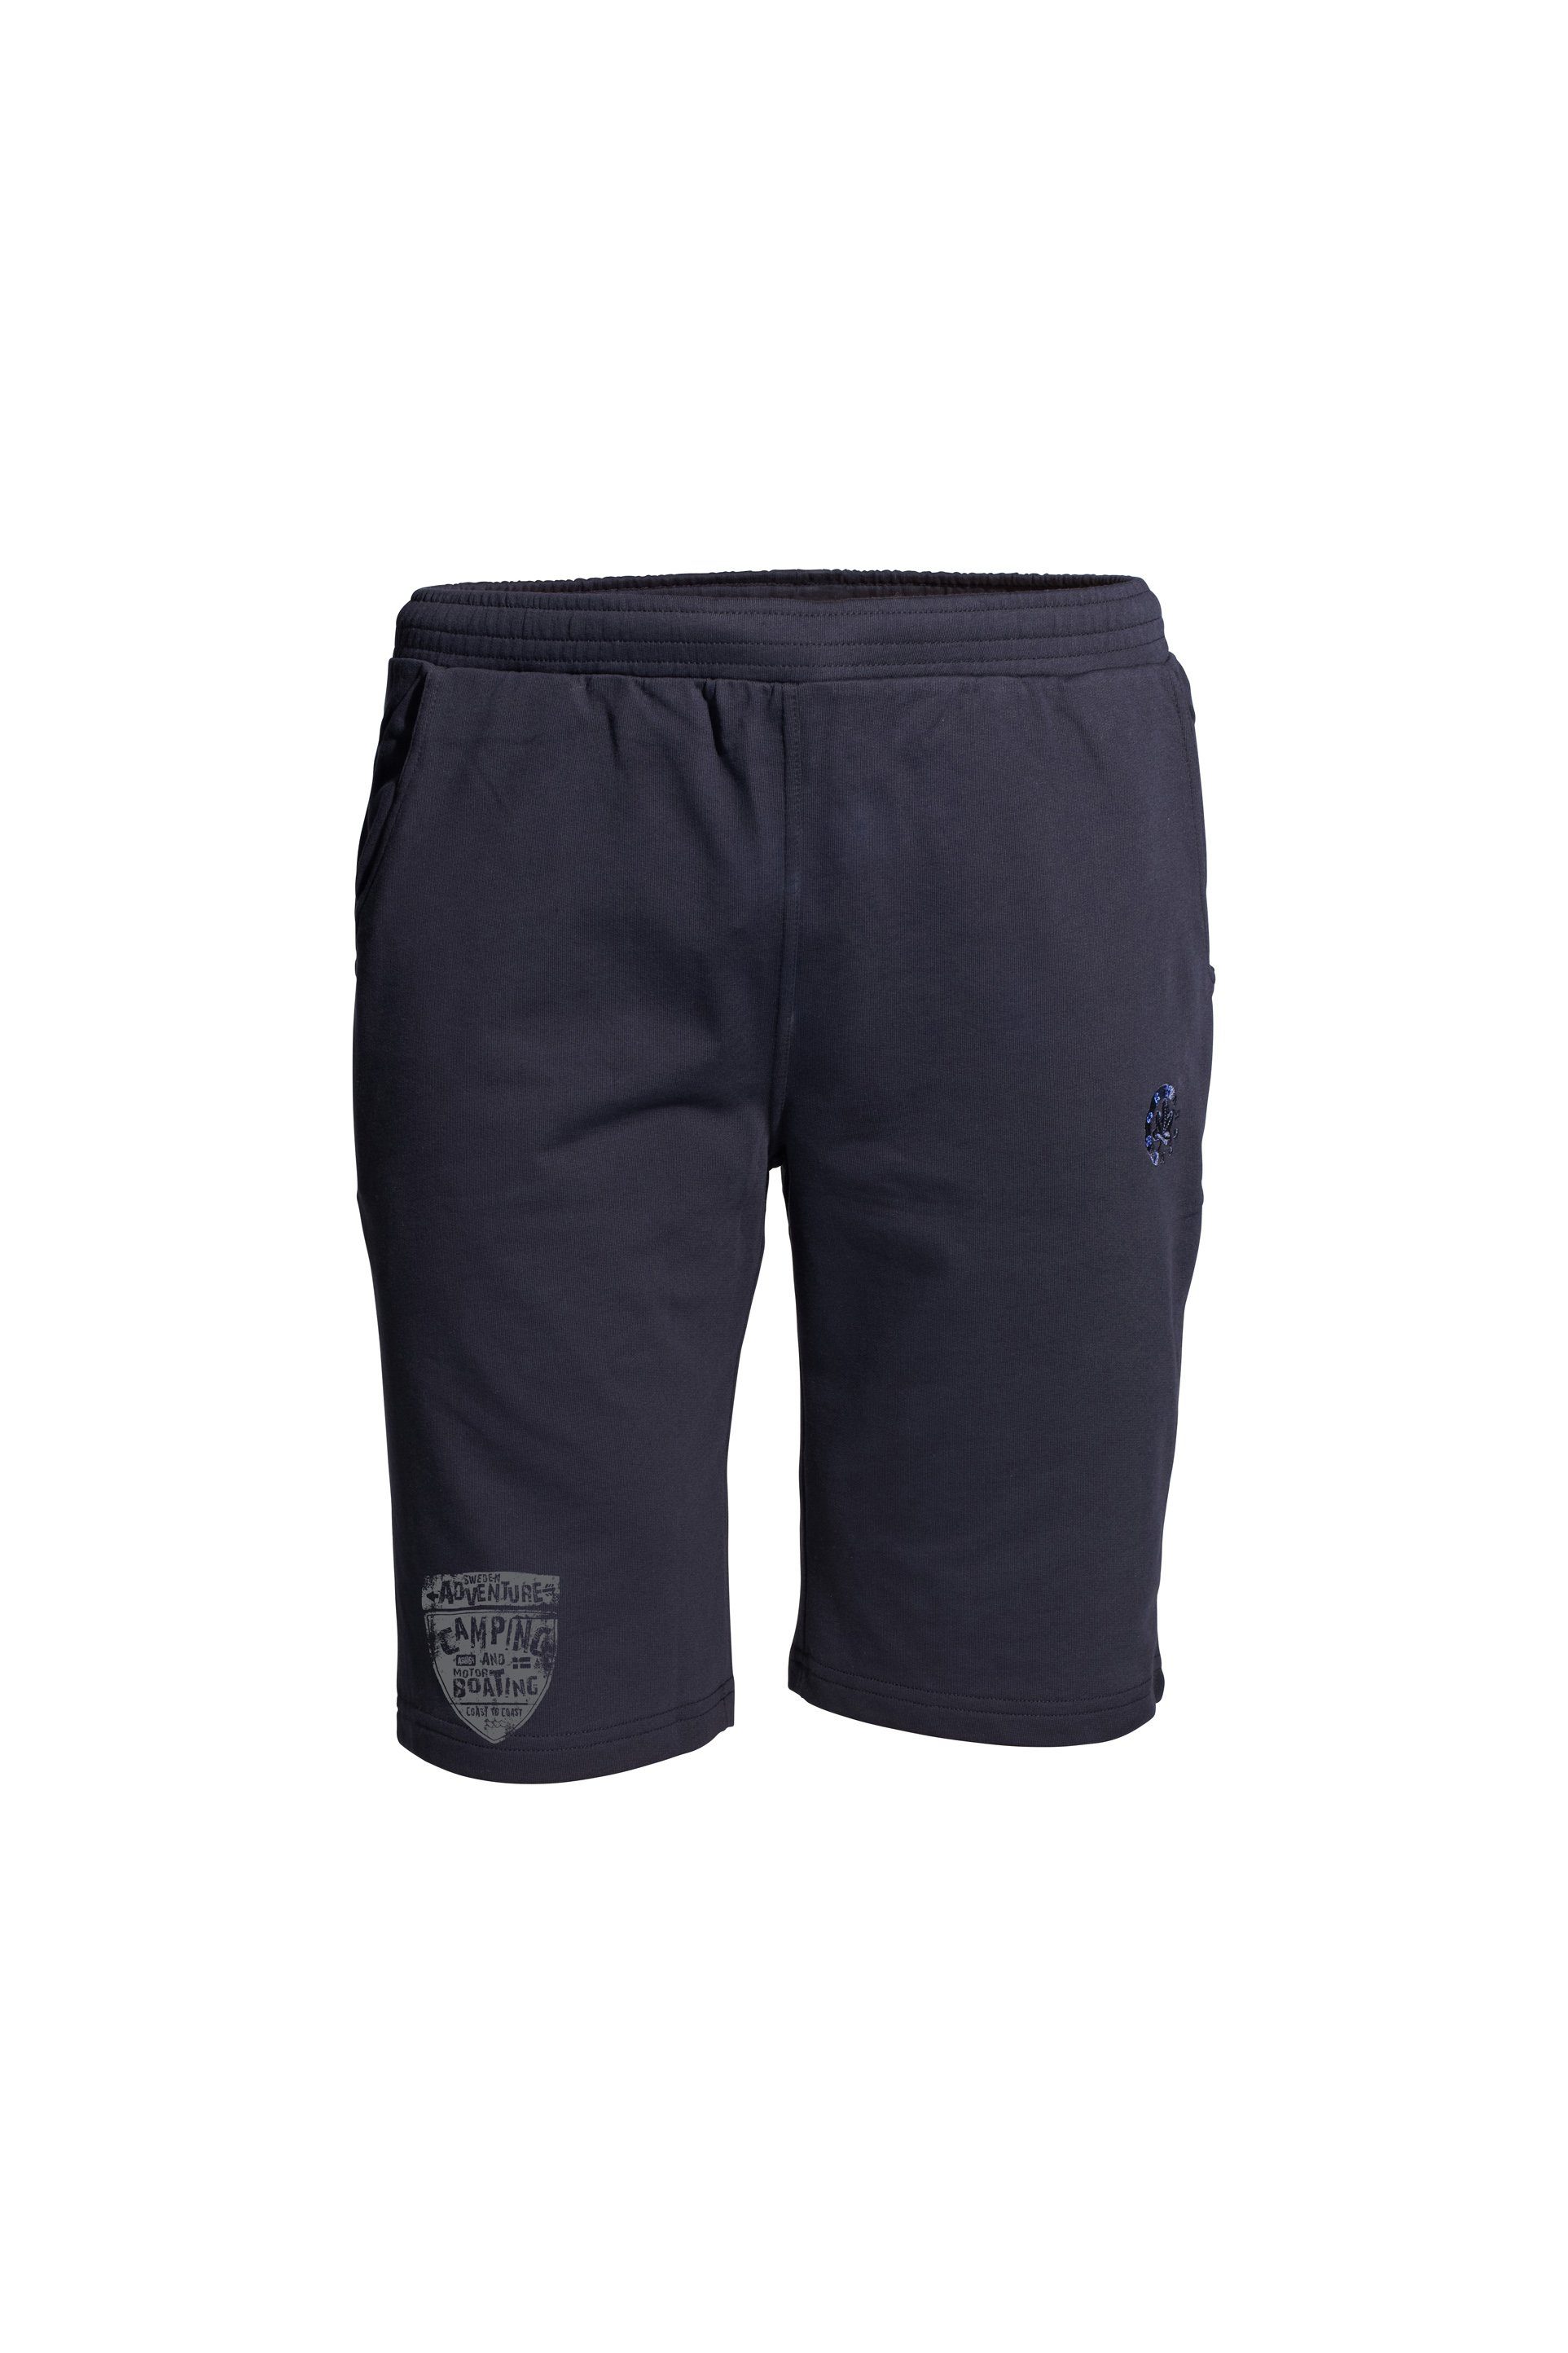 AHORN SPORTSWEAR Shorts CAMPING mit sportlichem Print am Bein blau